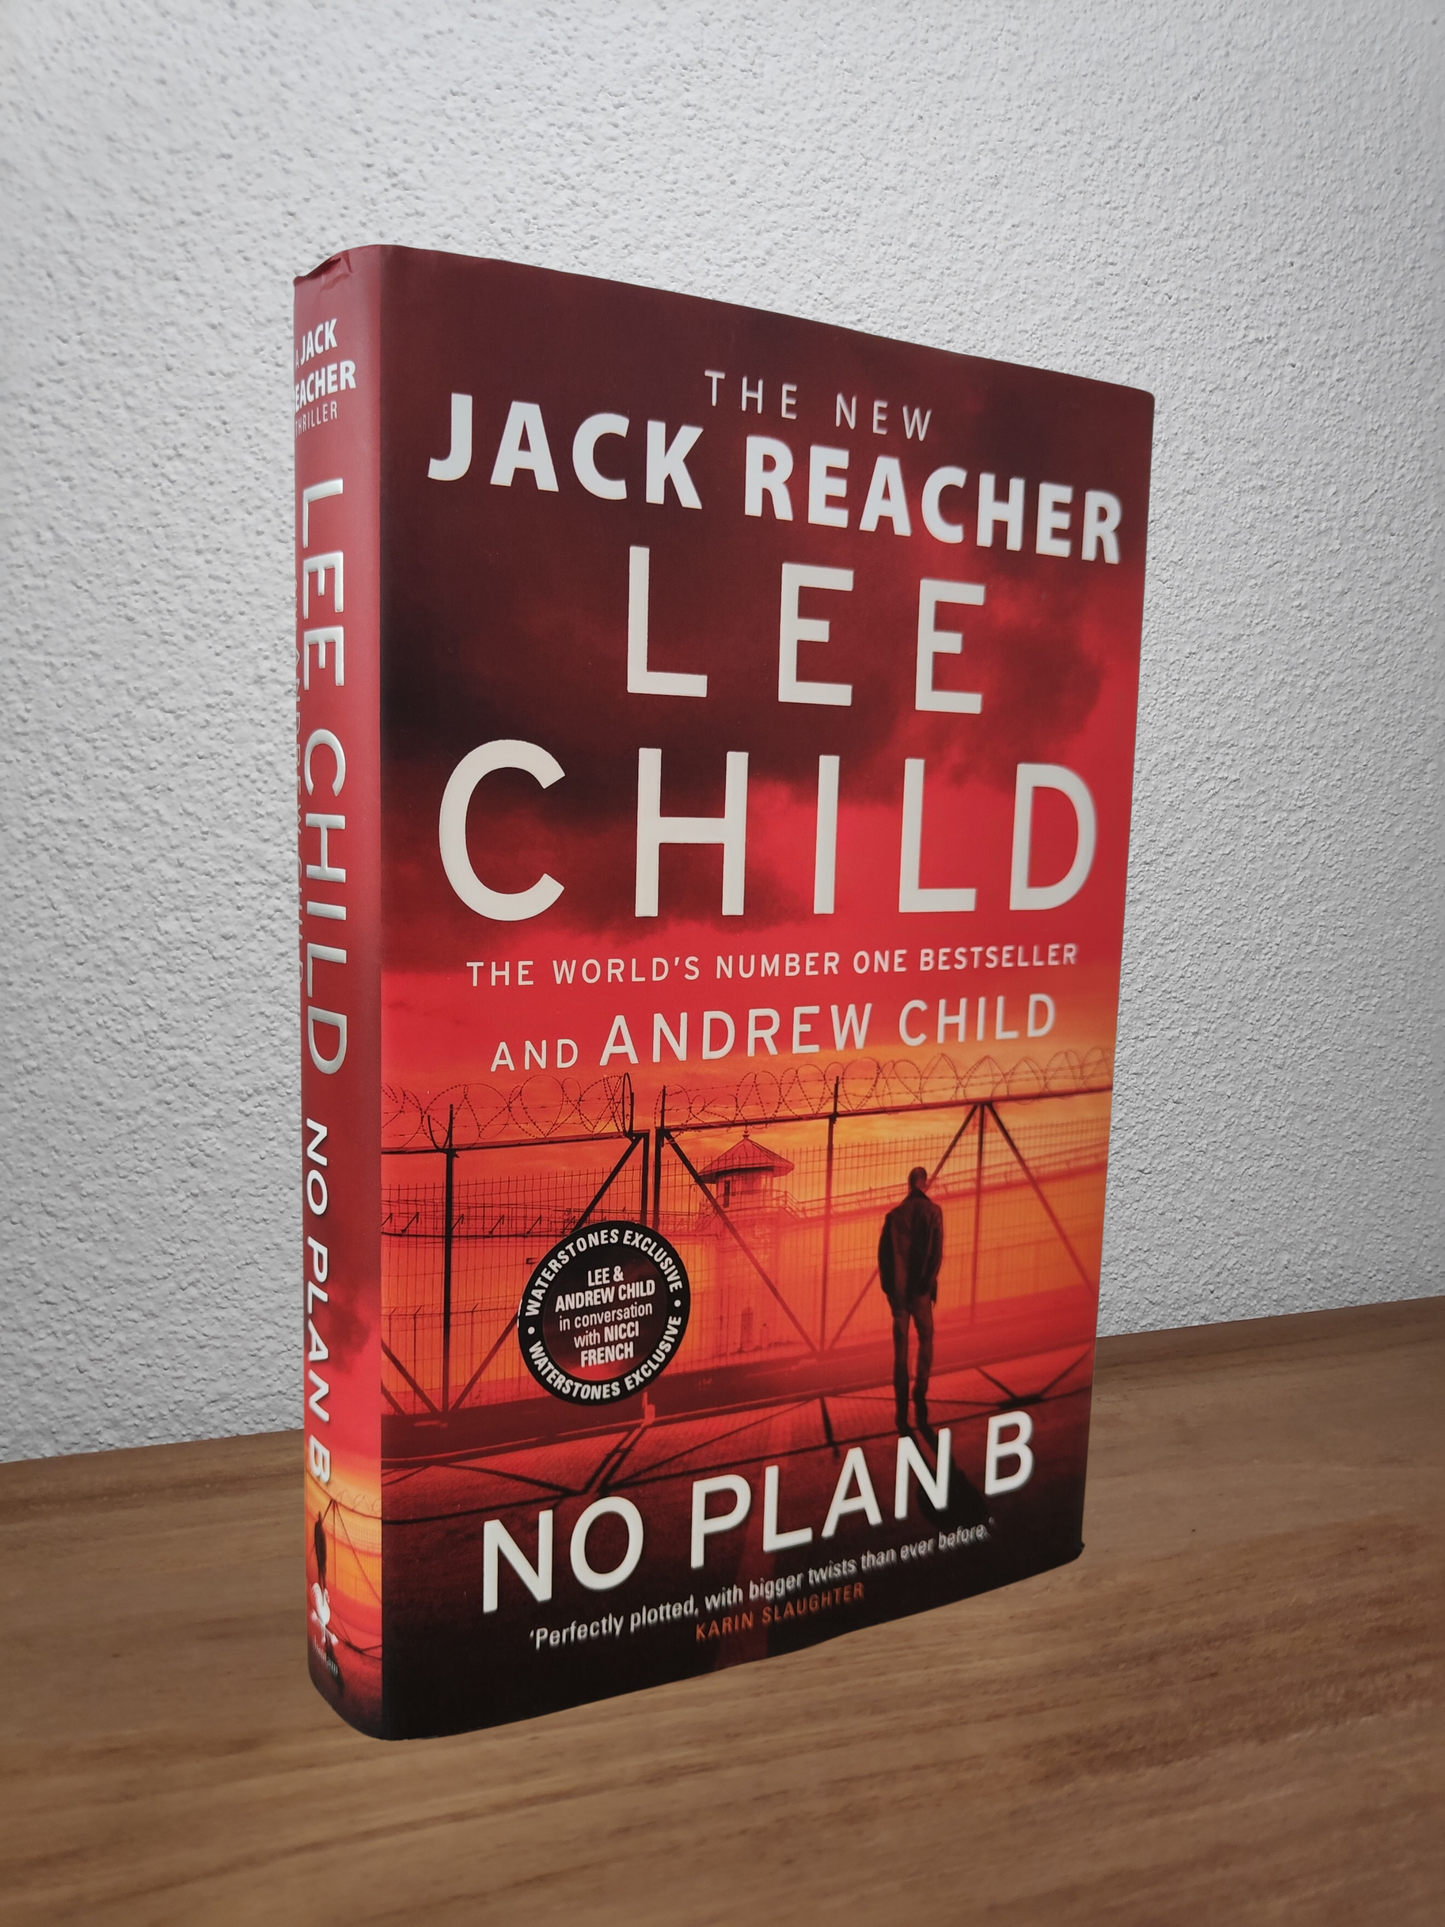 Lee Child - No Plan B (Jack Reacher #27)